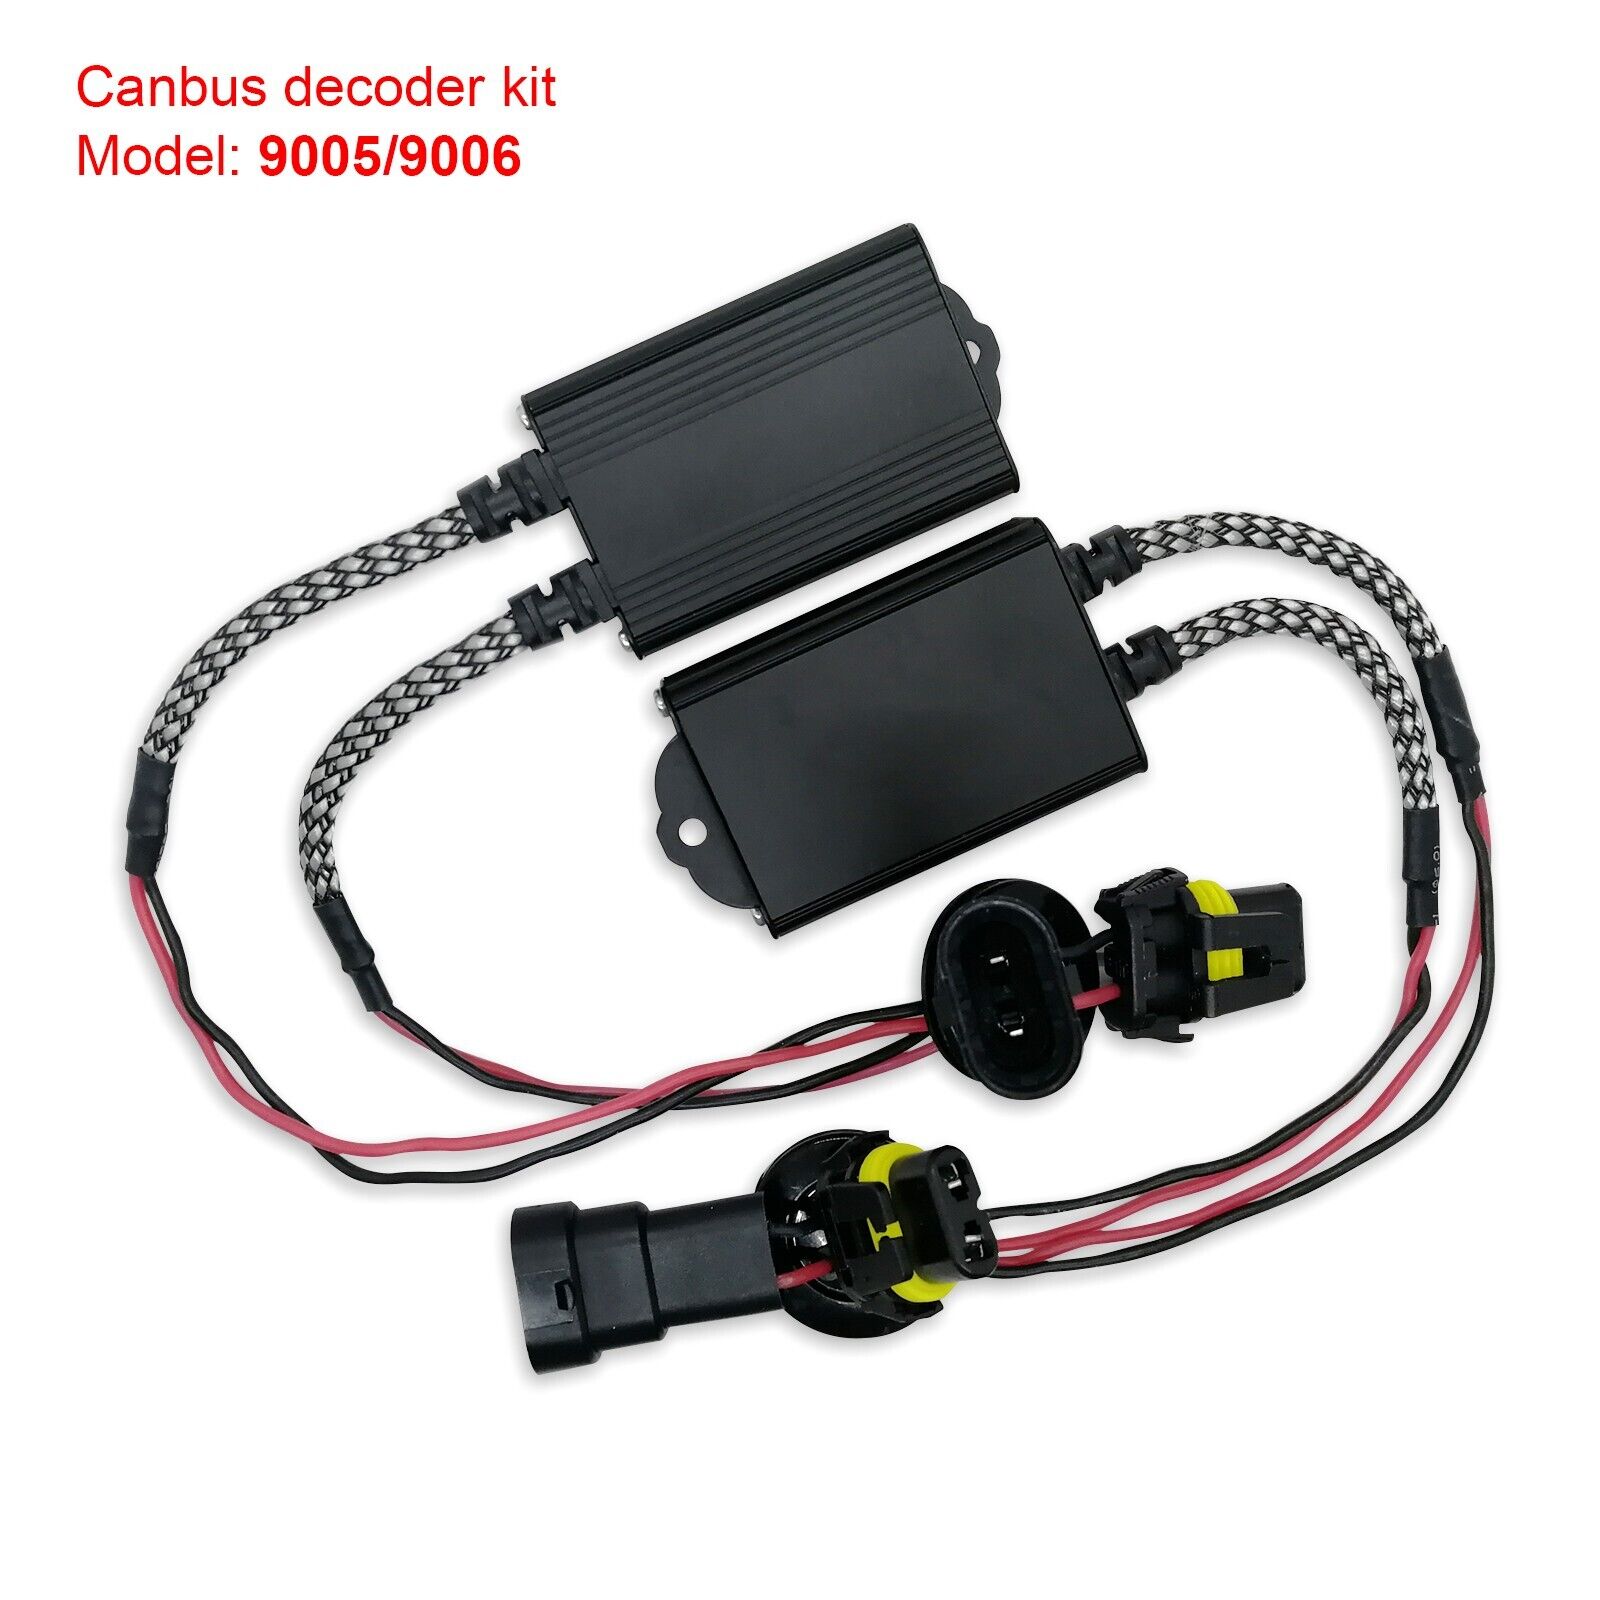 2x 9005/9006 LED Headlight Canbus Decoder Error Anti Flicker Resistor Canceller